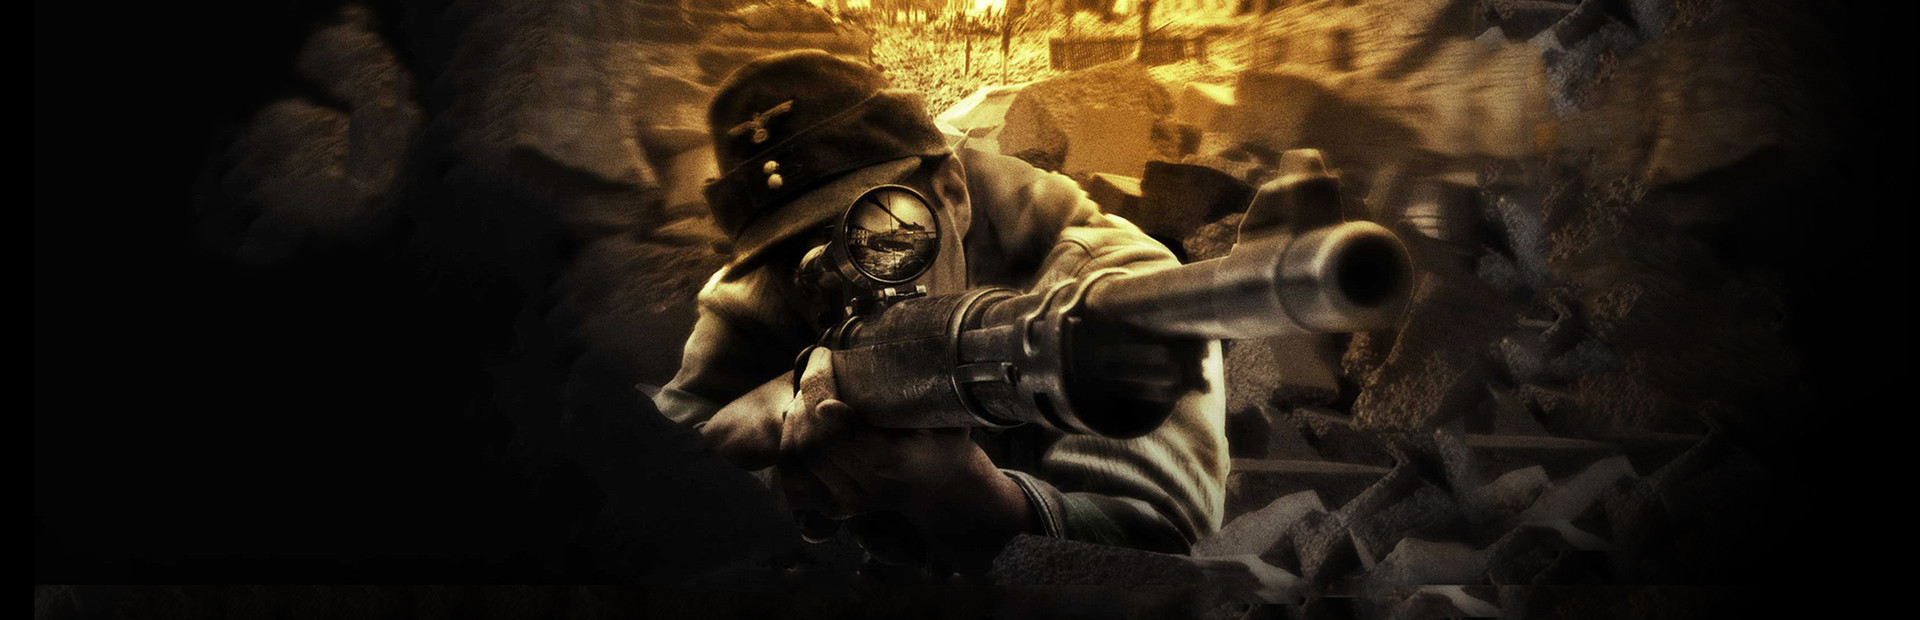 Sniper Elite cover image